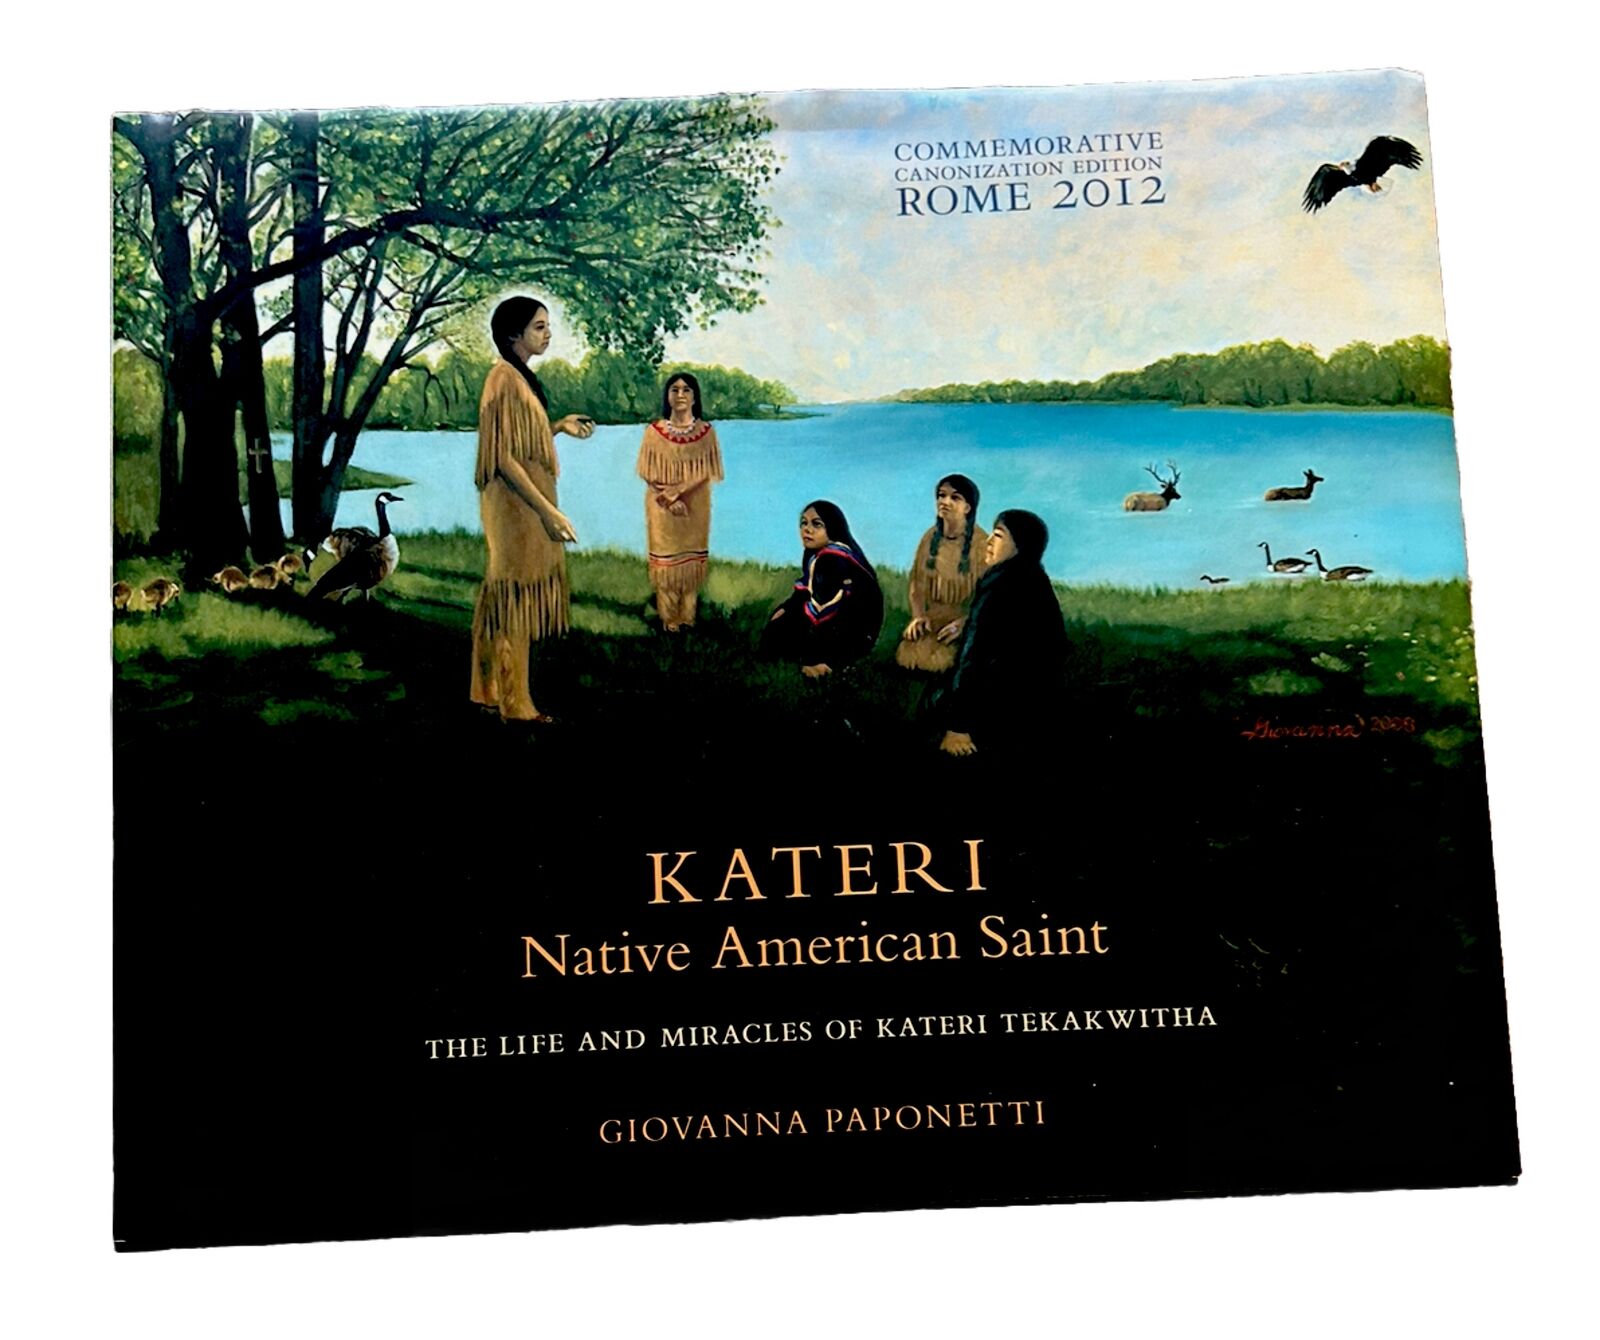 Kateri Native American Saint Book SIGNED Commemorative Canonization Ed 2012